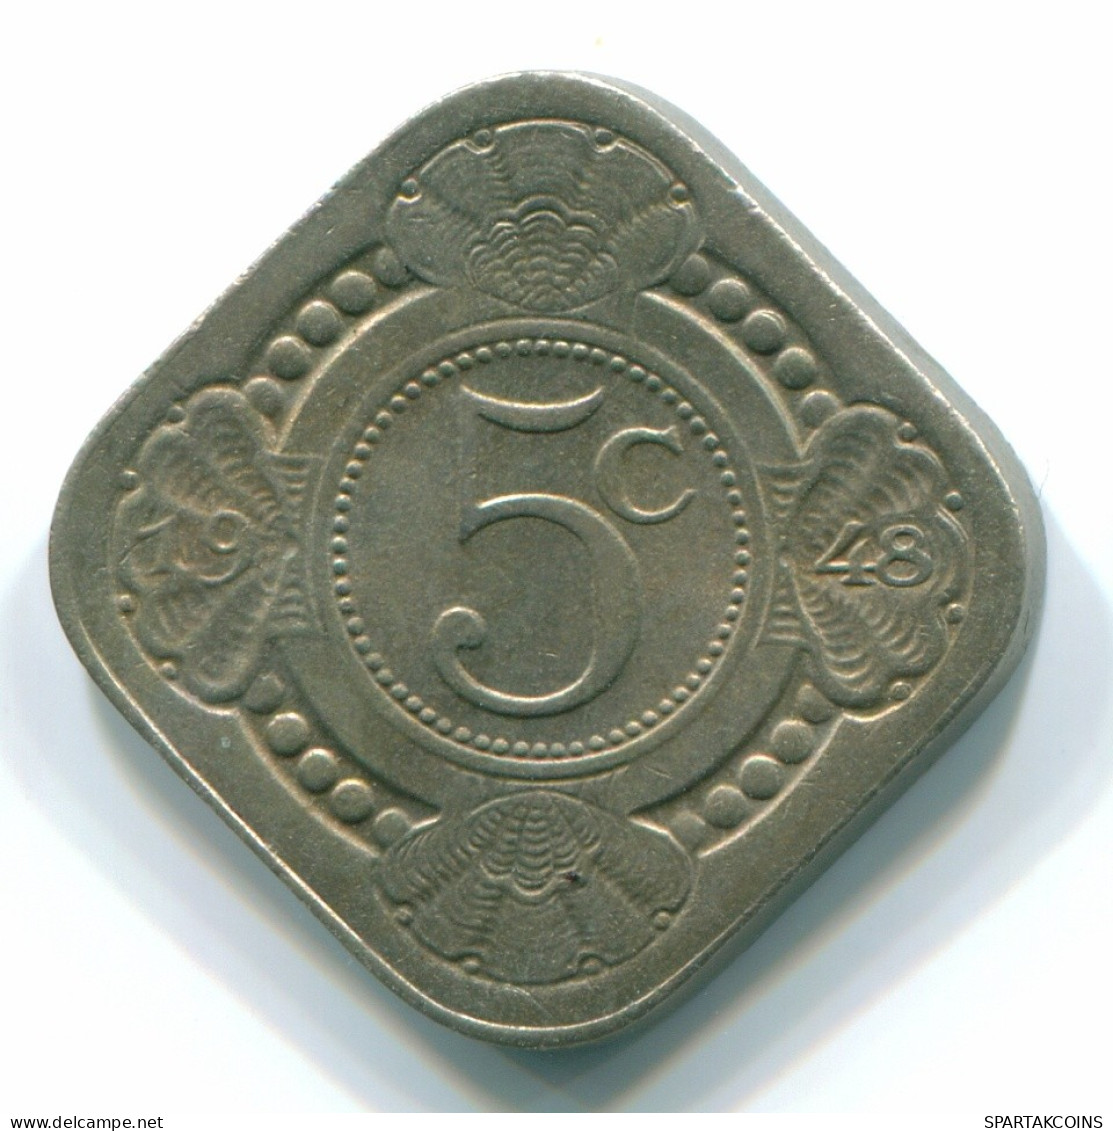 5 CENTS 1948 CURACAO NEERLANDÉS NETHERLANDS Nickel Colonial Moneda #S12379.E.A - Curacao